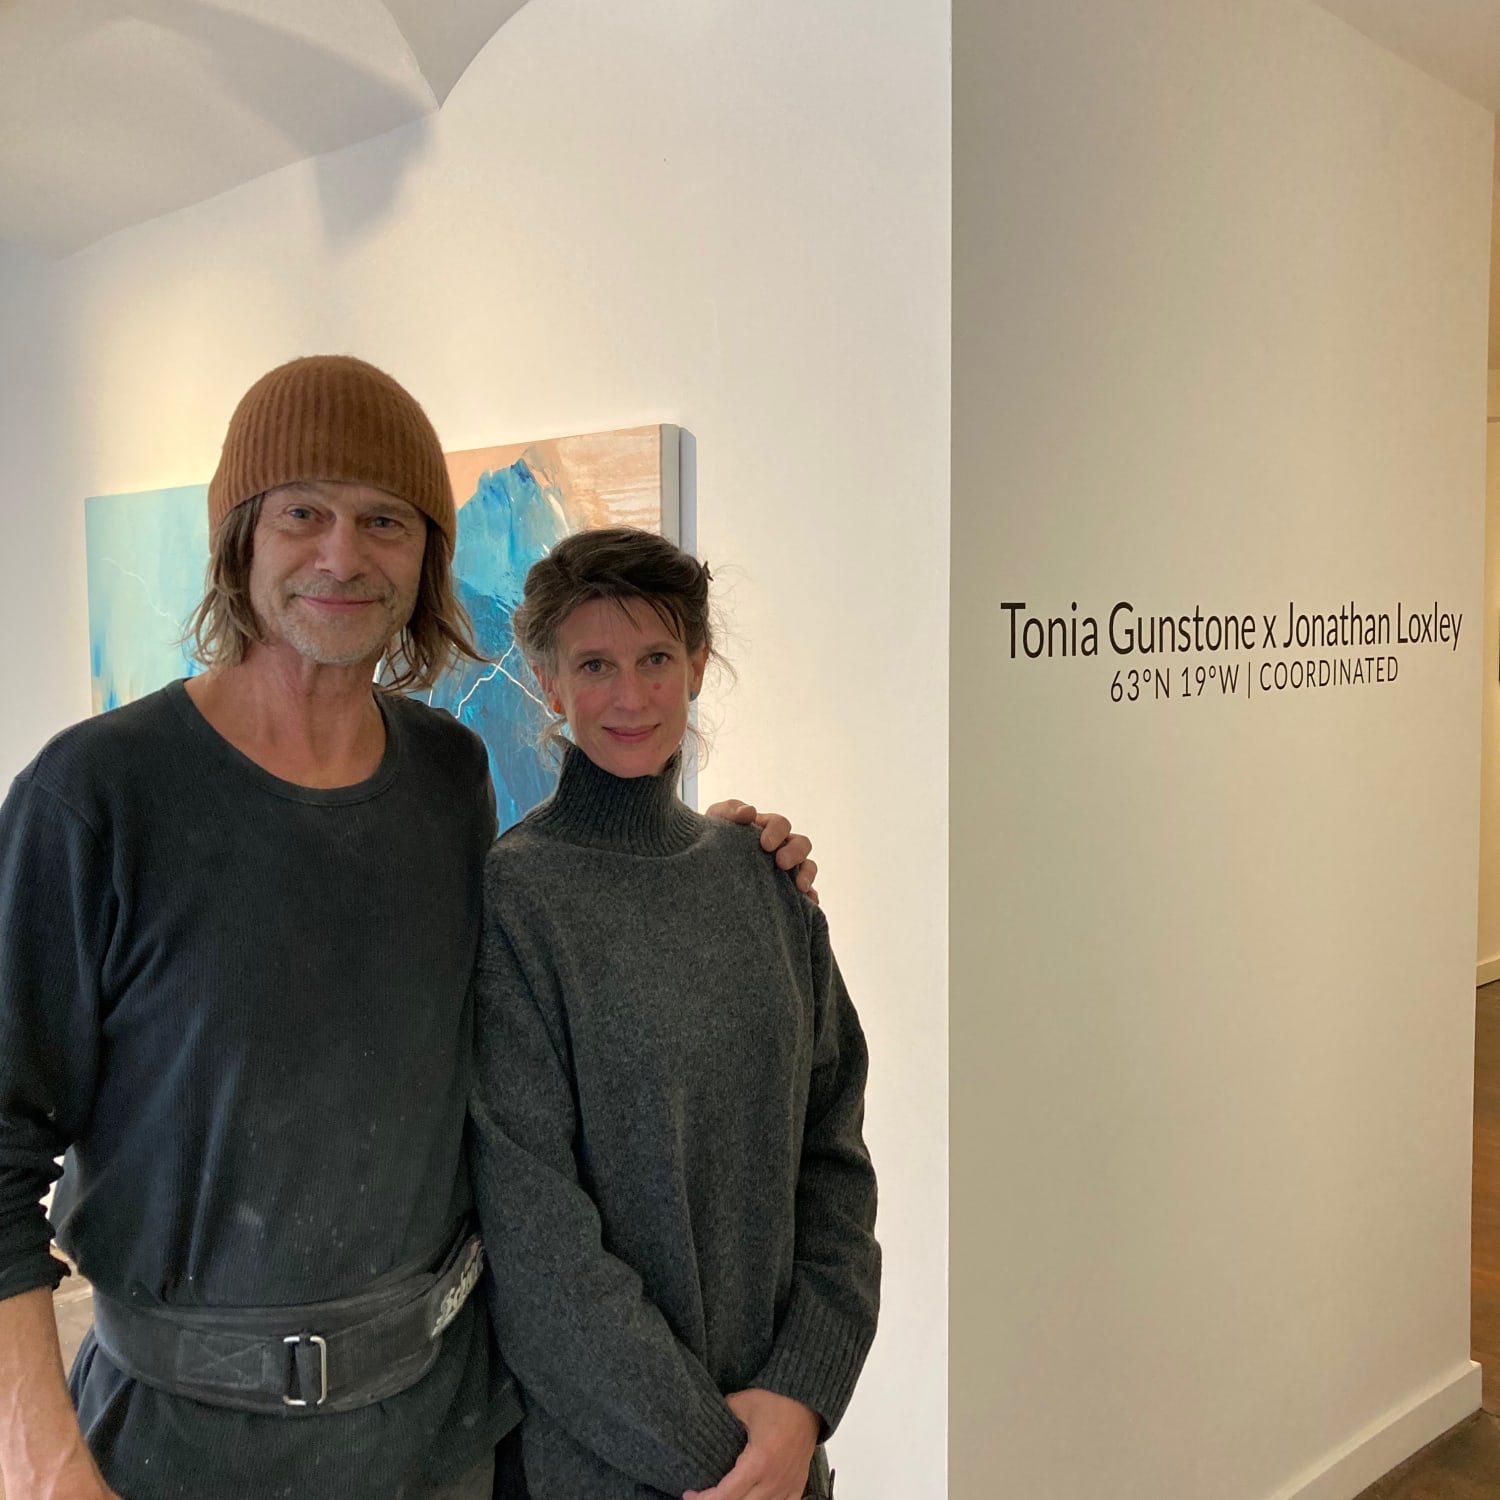 Meet the artists – Tonia Gunstone and Jonathan Loxley